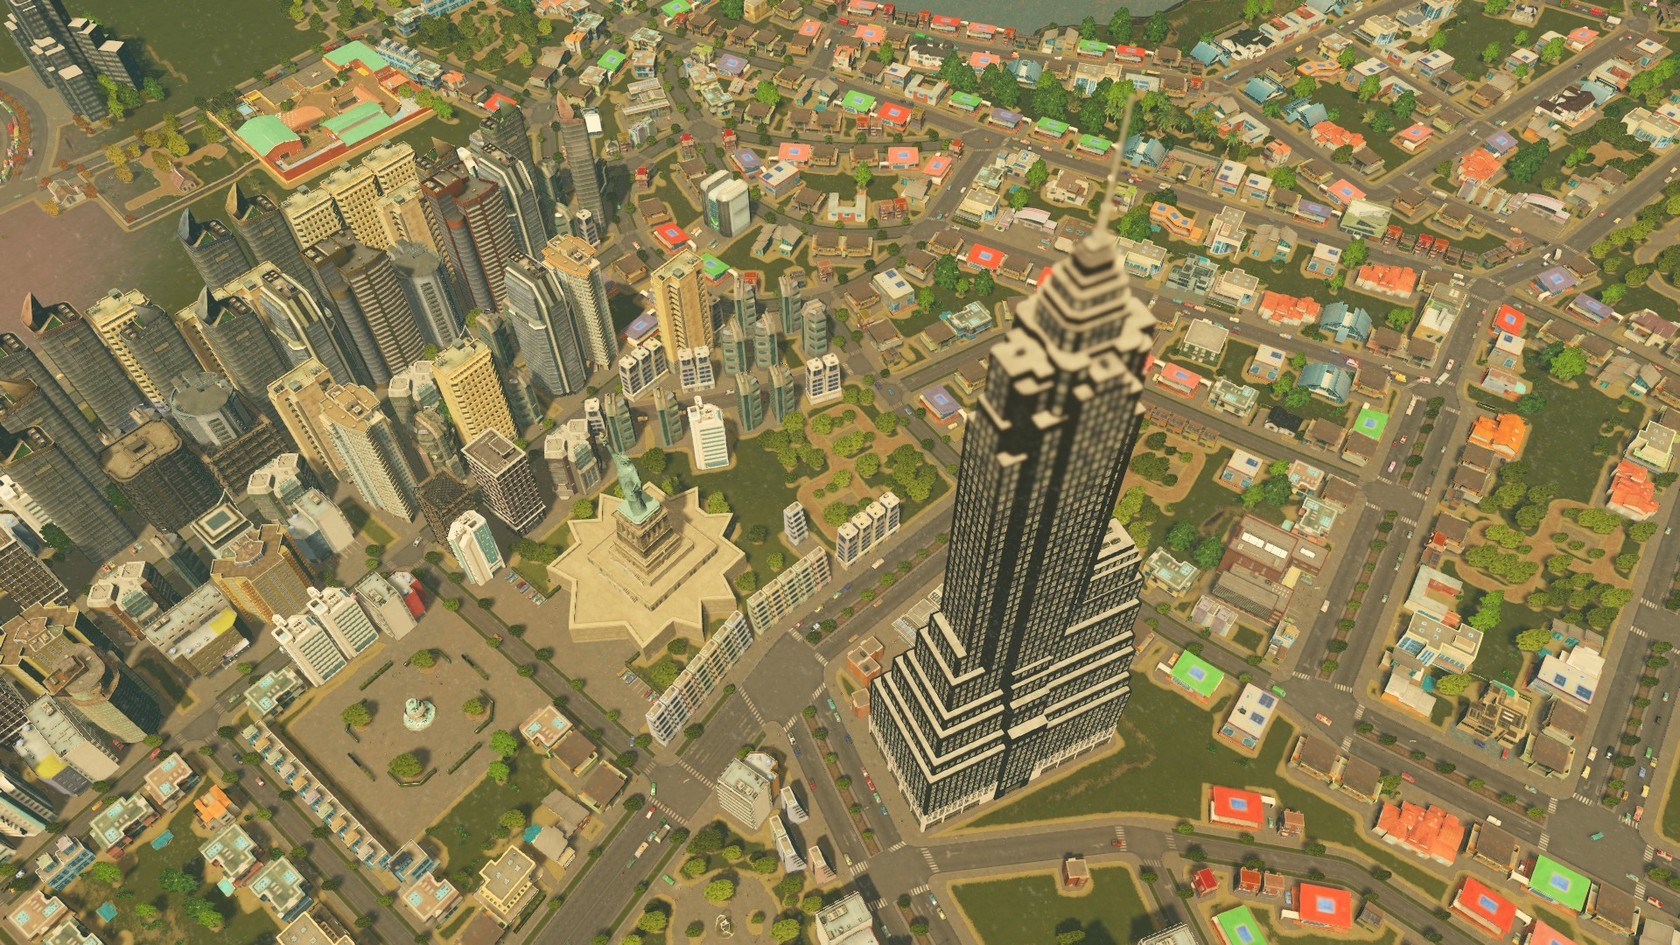 cities skylines for mac download